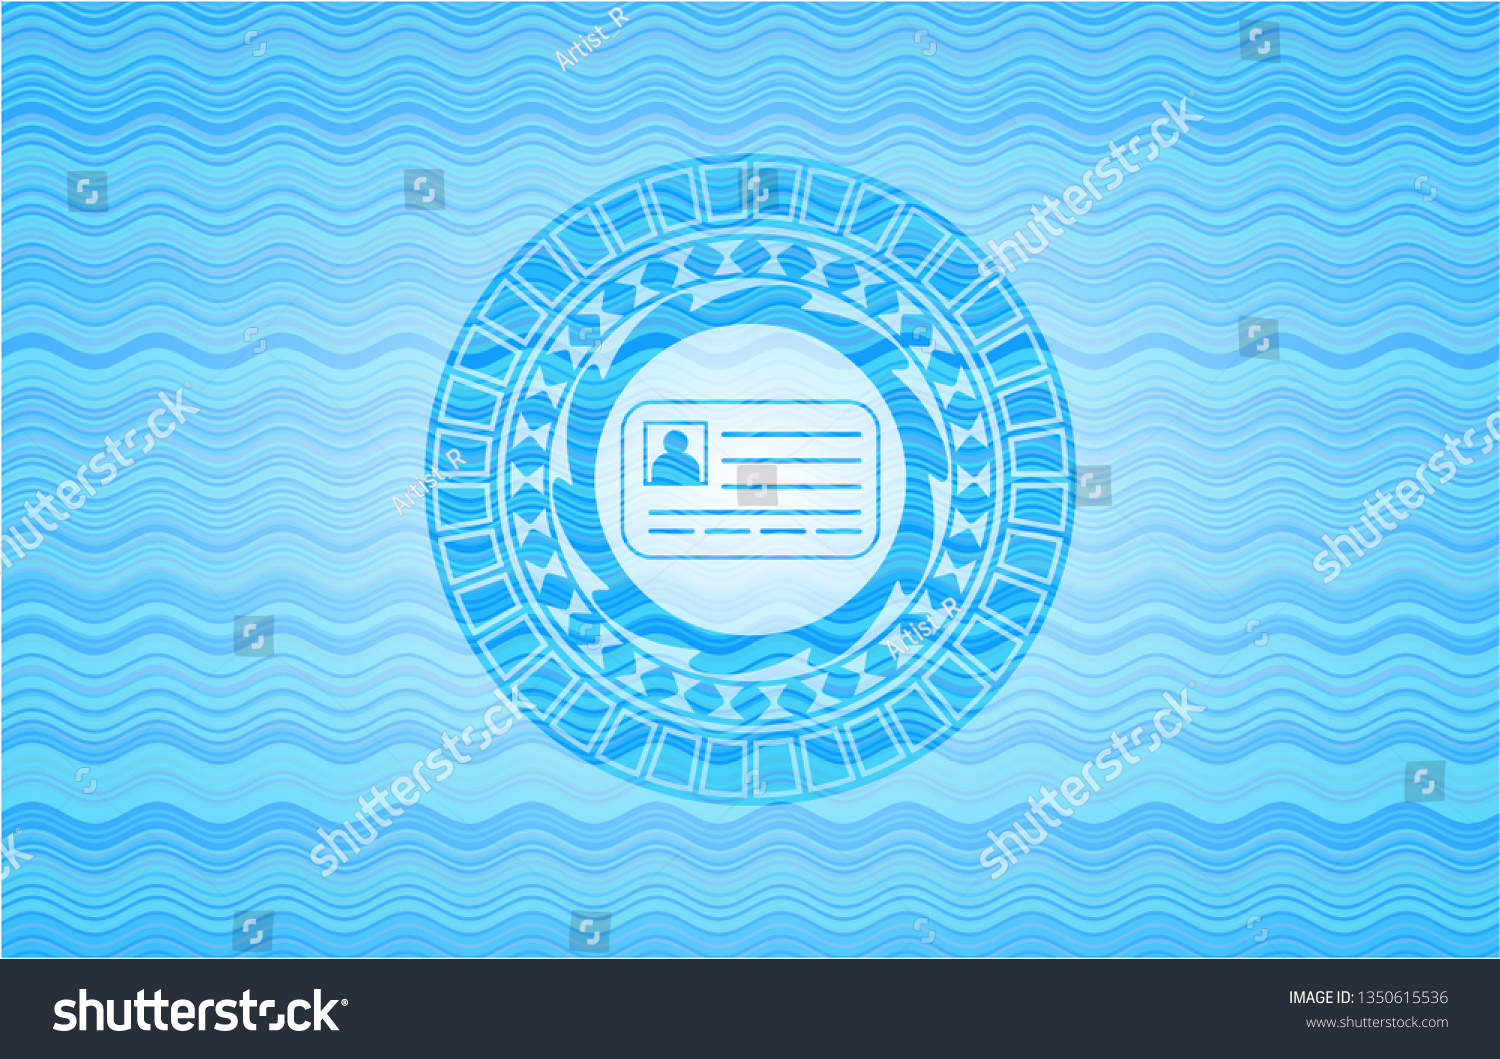 identification card icon inside light blue water wave emblem background. #1350615536